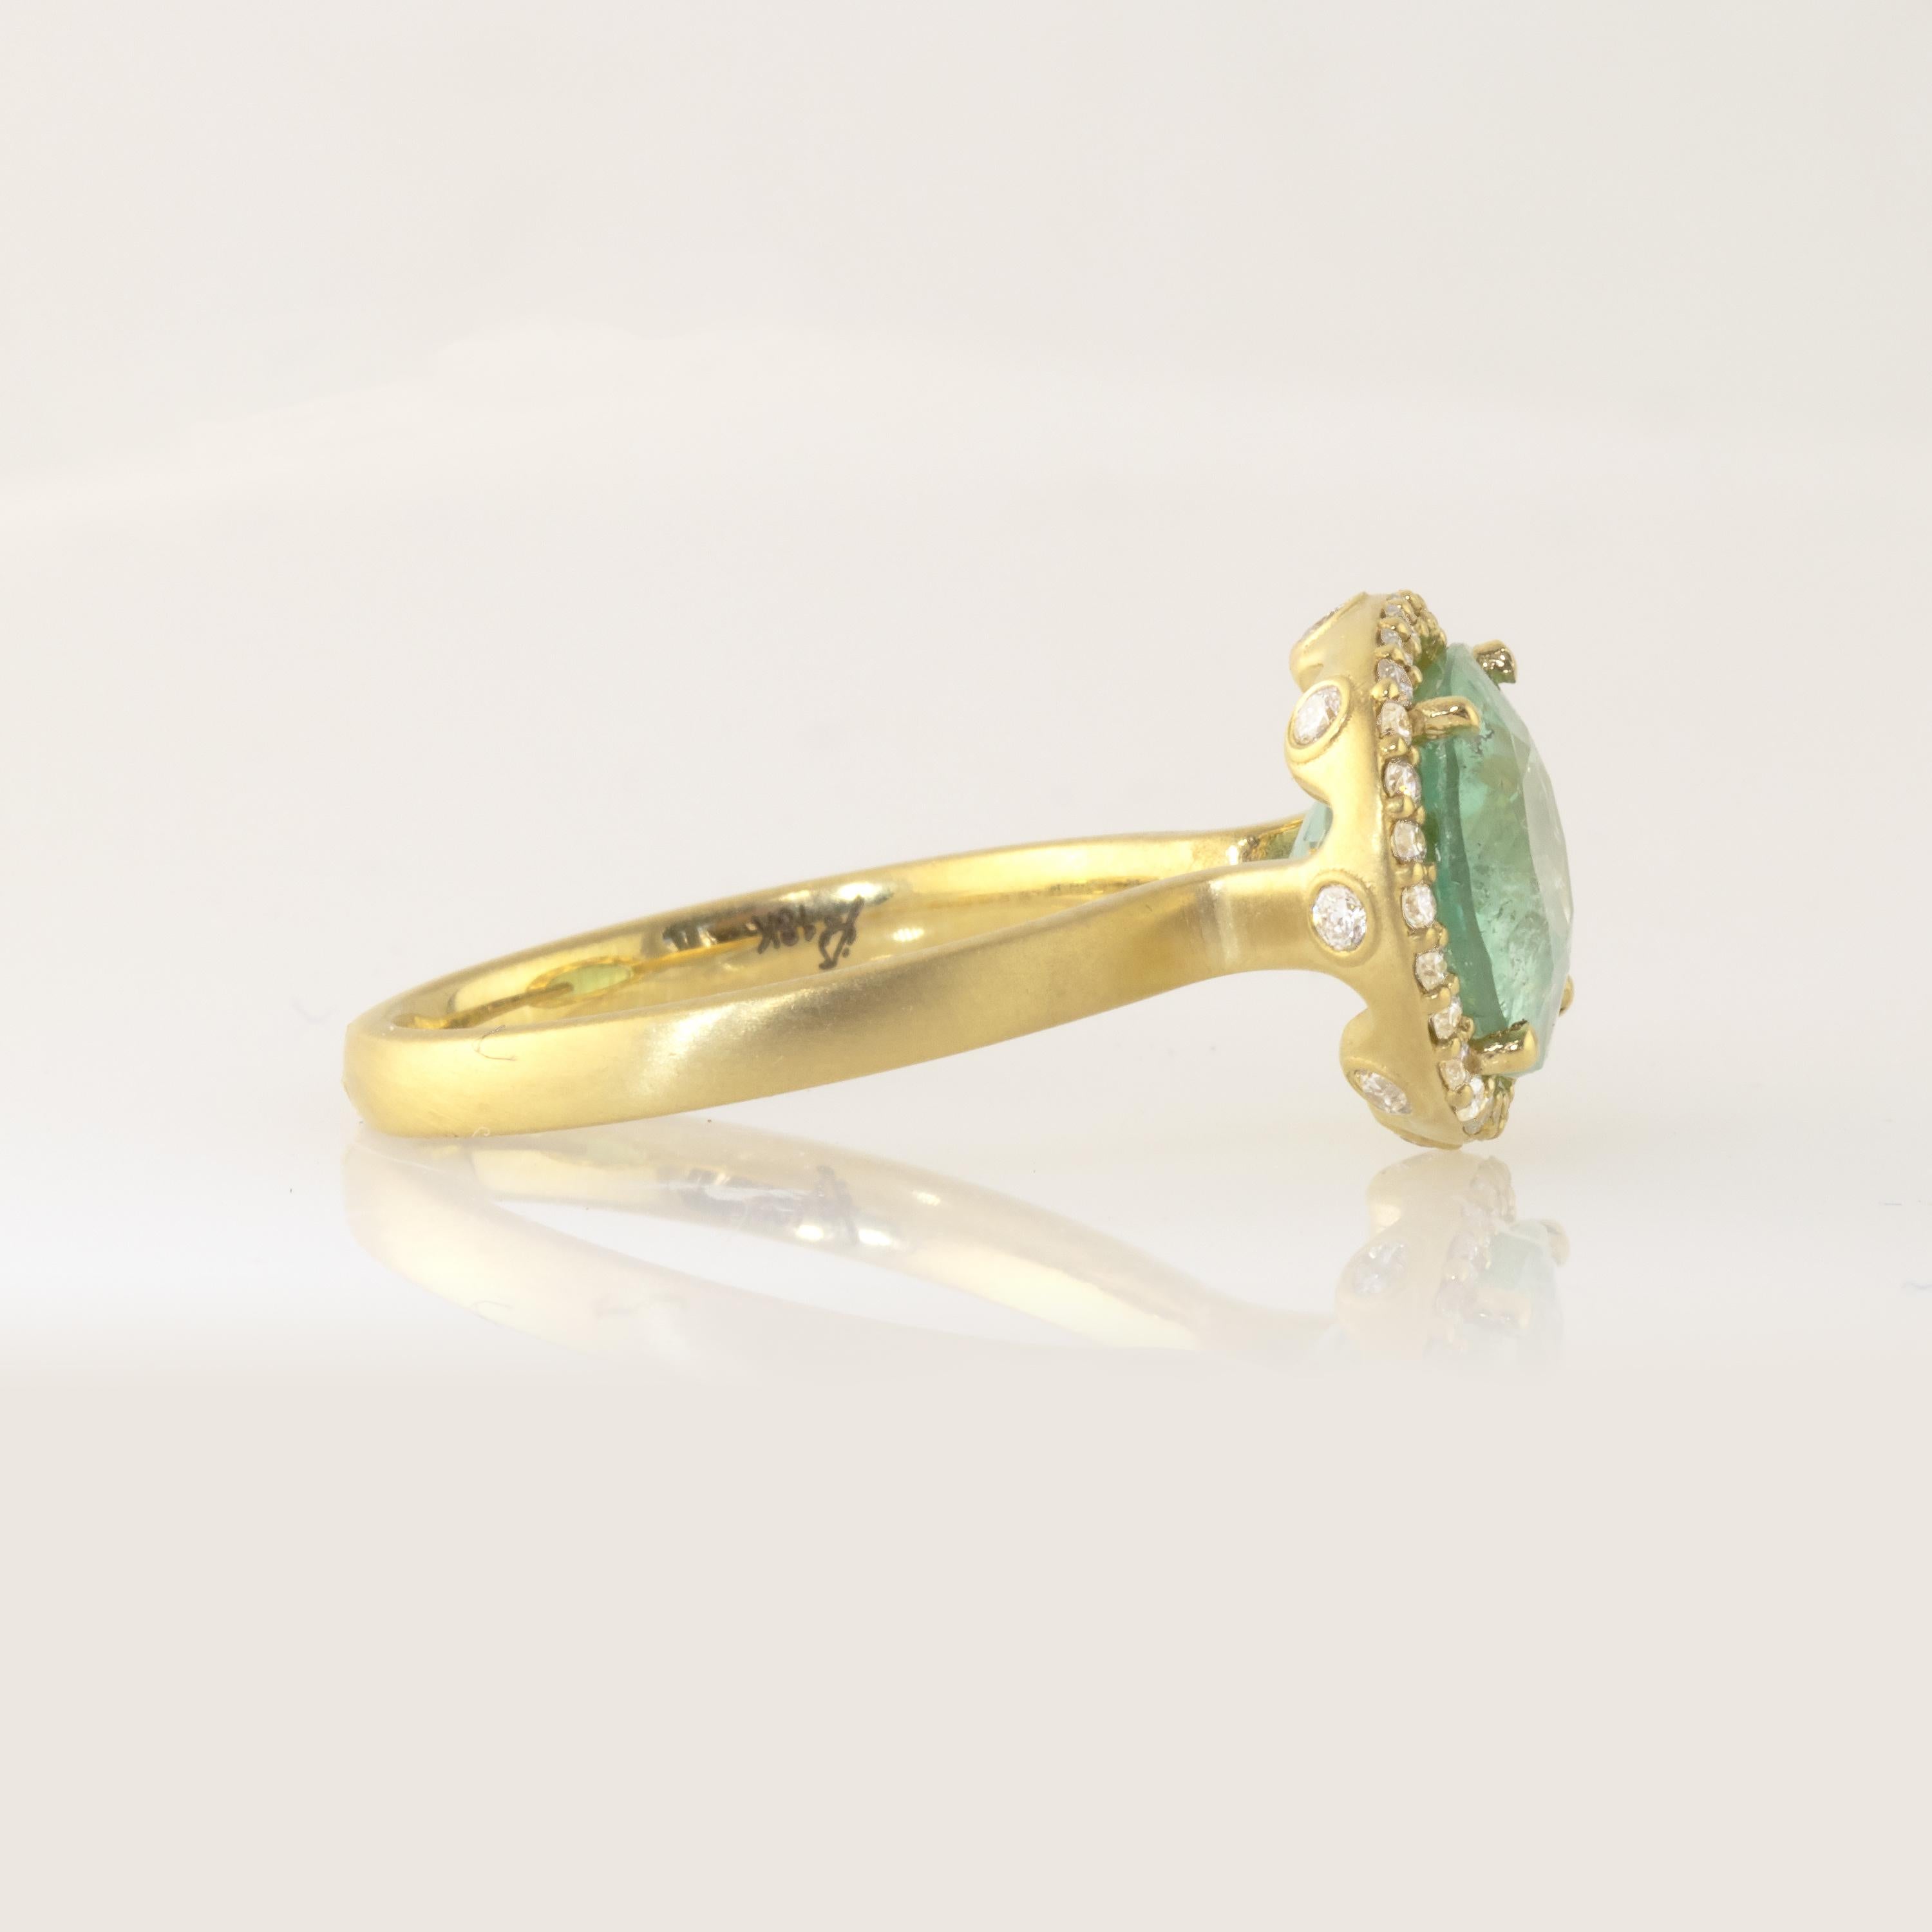 Oval Cut Ico & the Bird Fine Jewelry 4.29 carat Mint Tourmaline Diamond Gold Ring For Sale